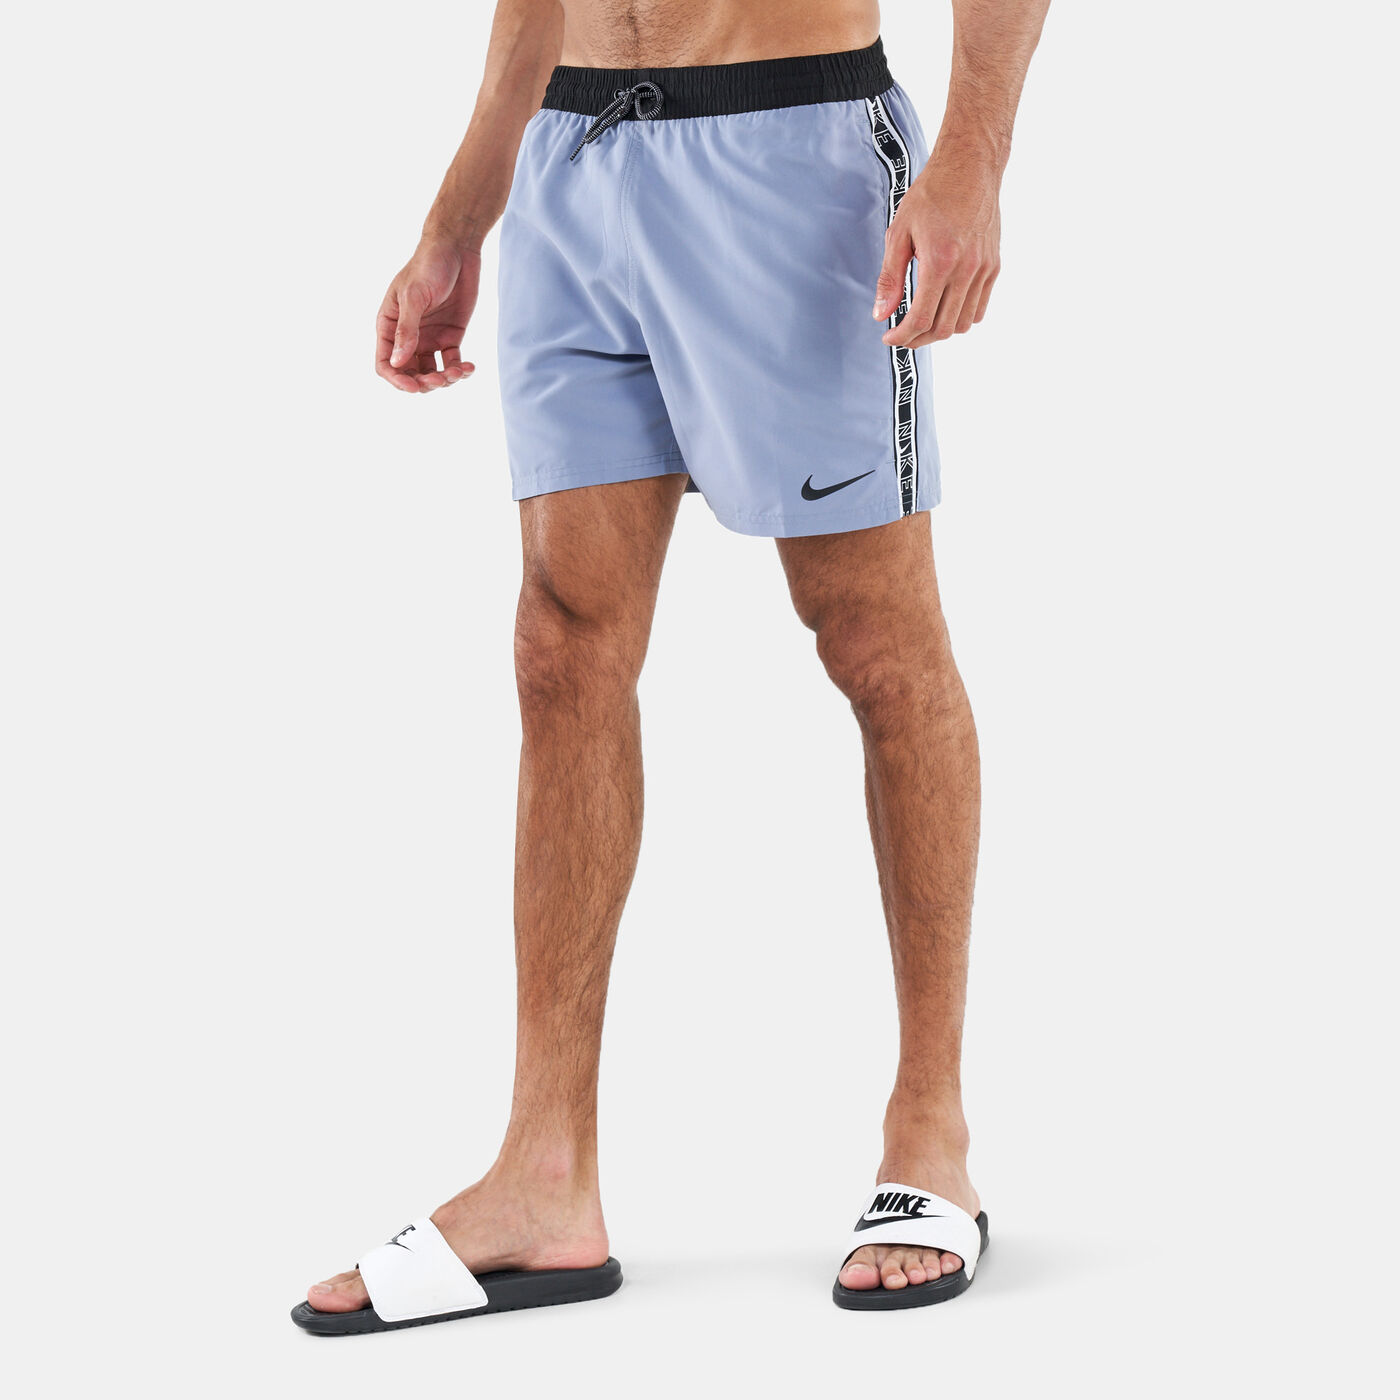 Men's 5-inch Volley Shorts